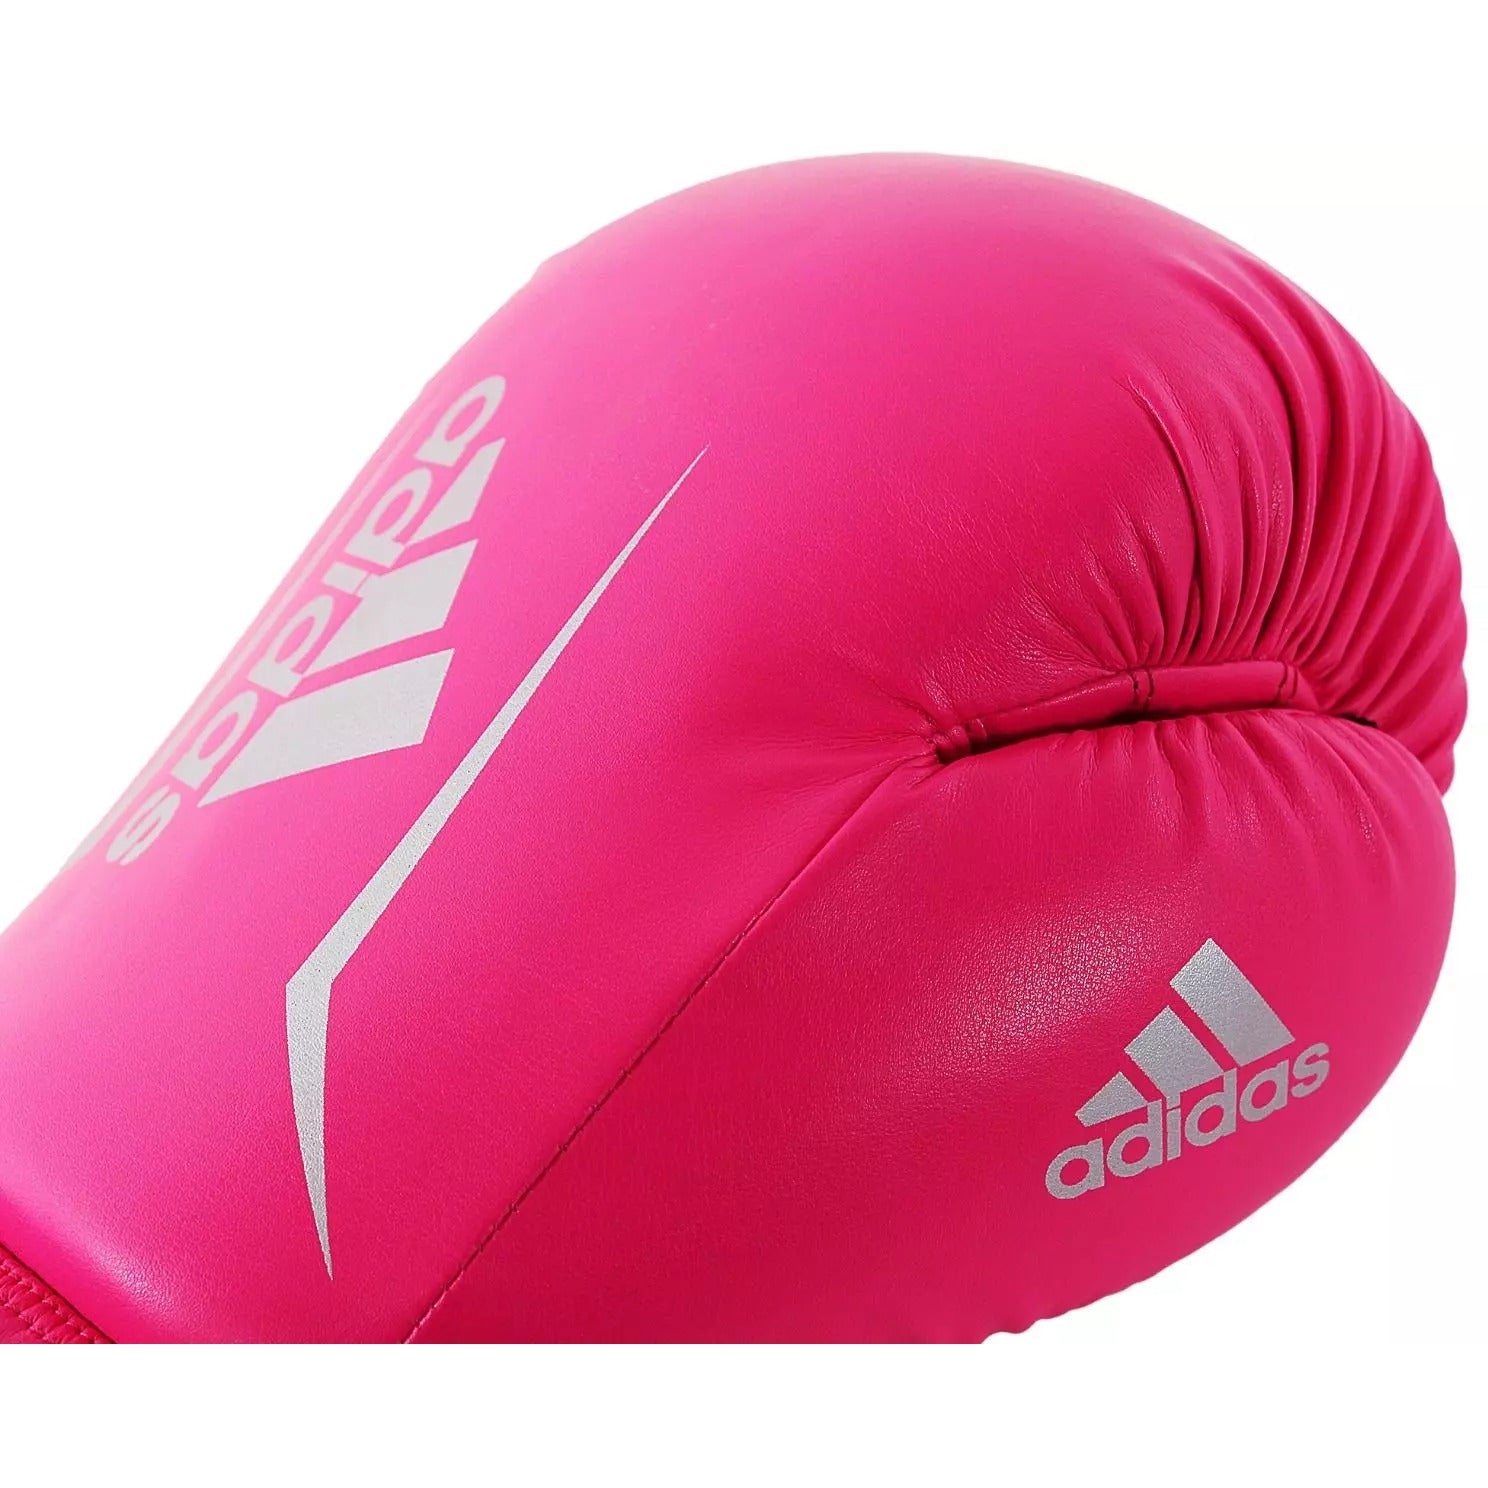 adidas Womens 50 Boxing Pink Budo Speed – Online Training Gloves